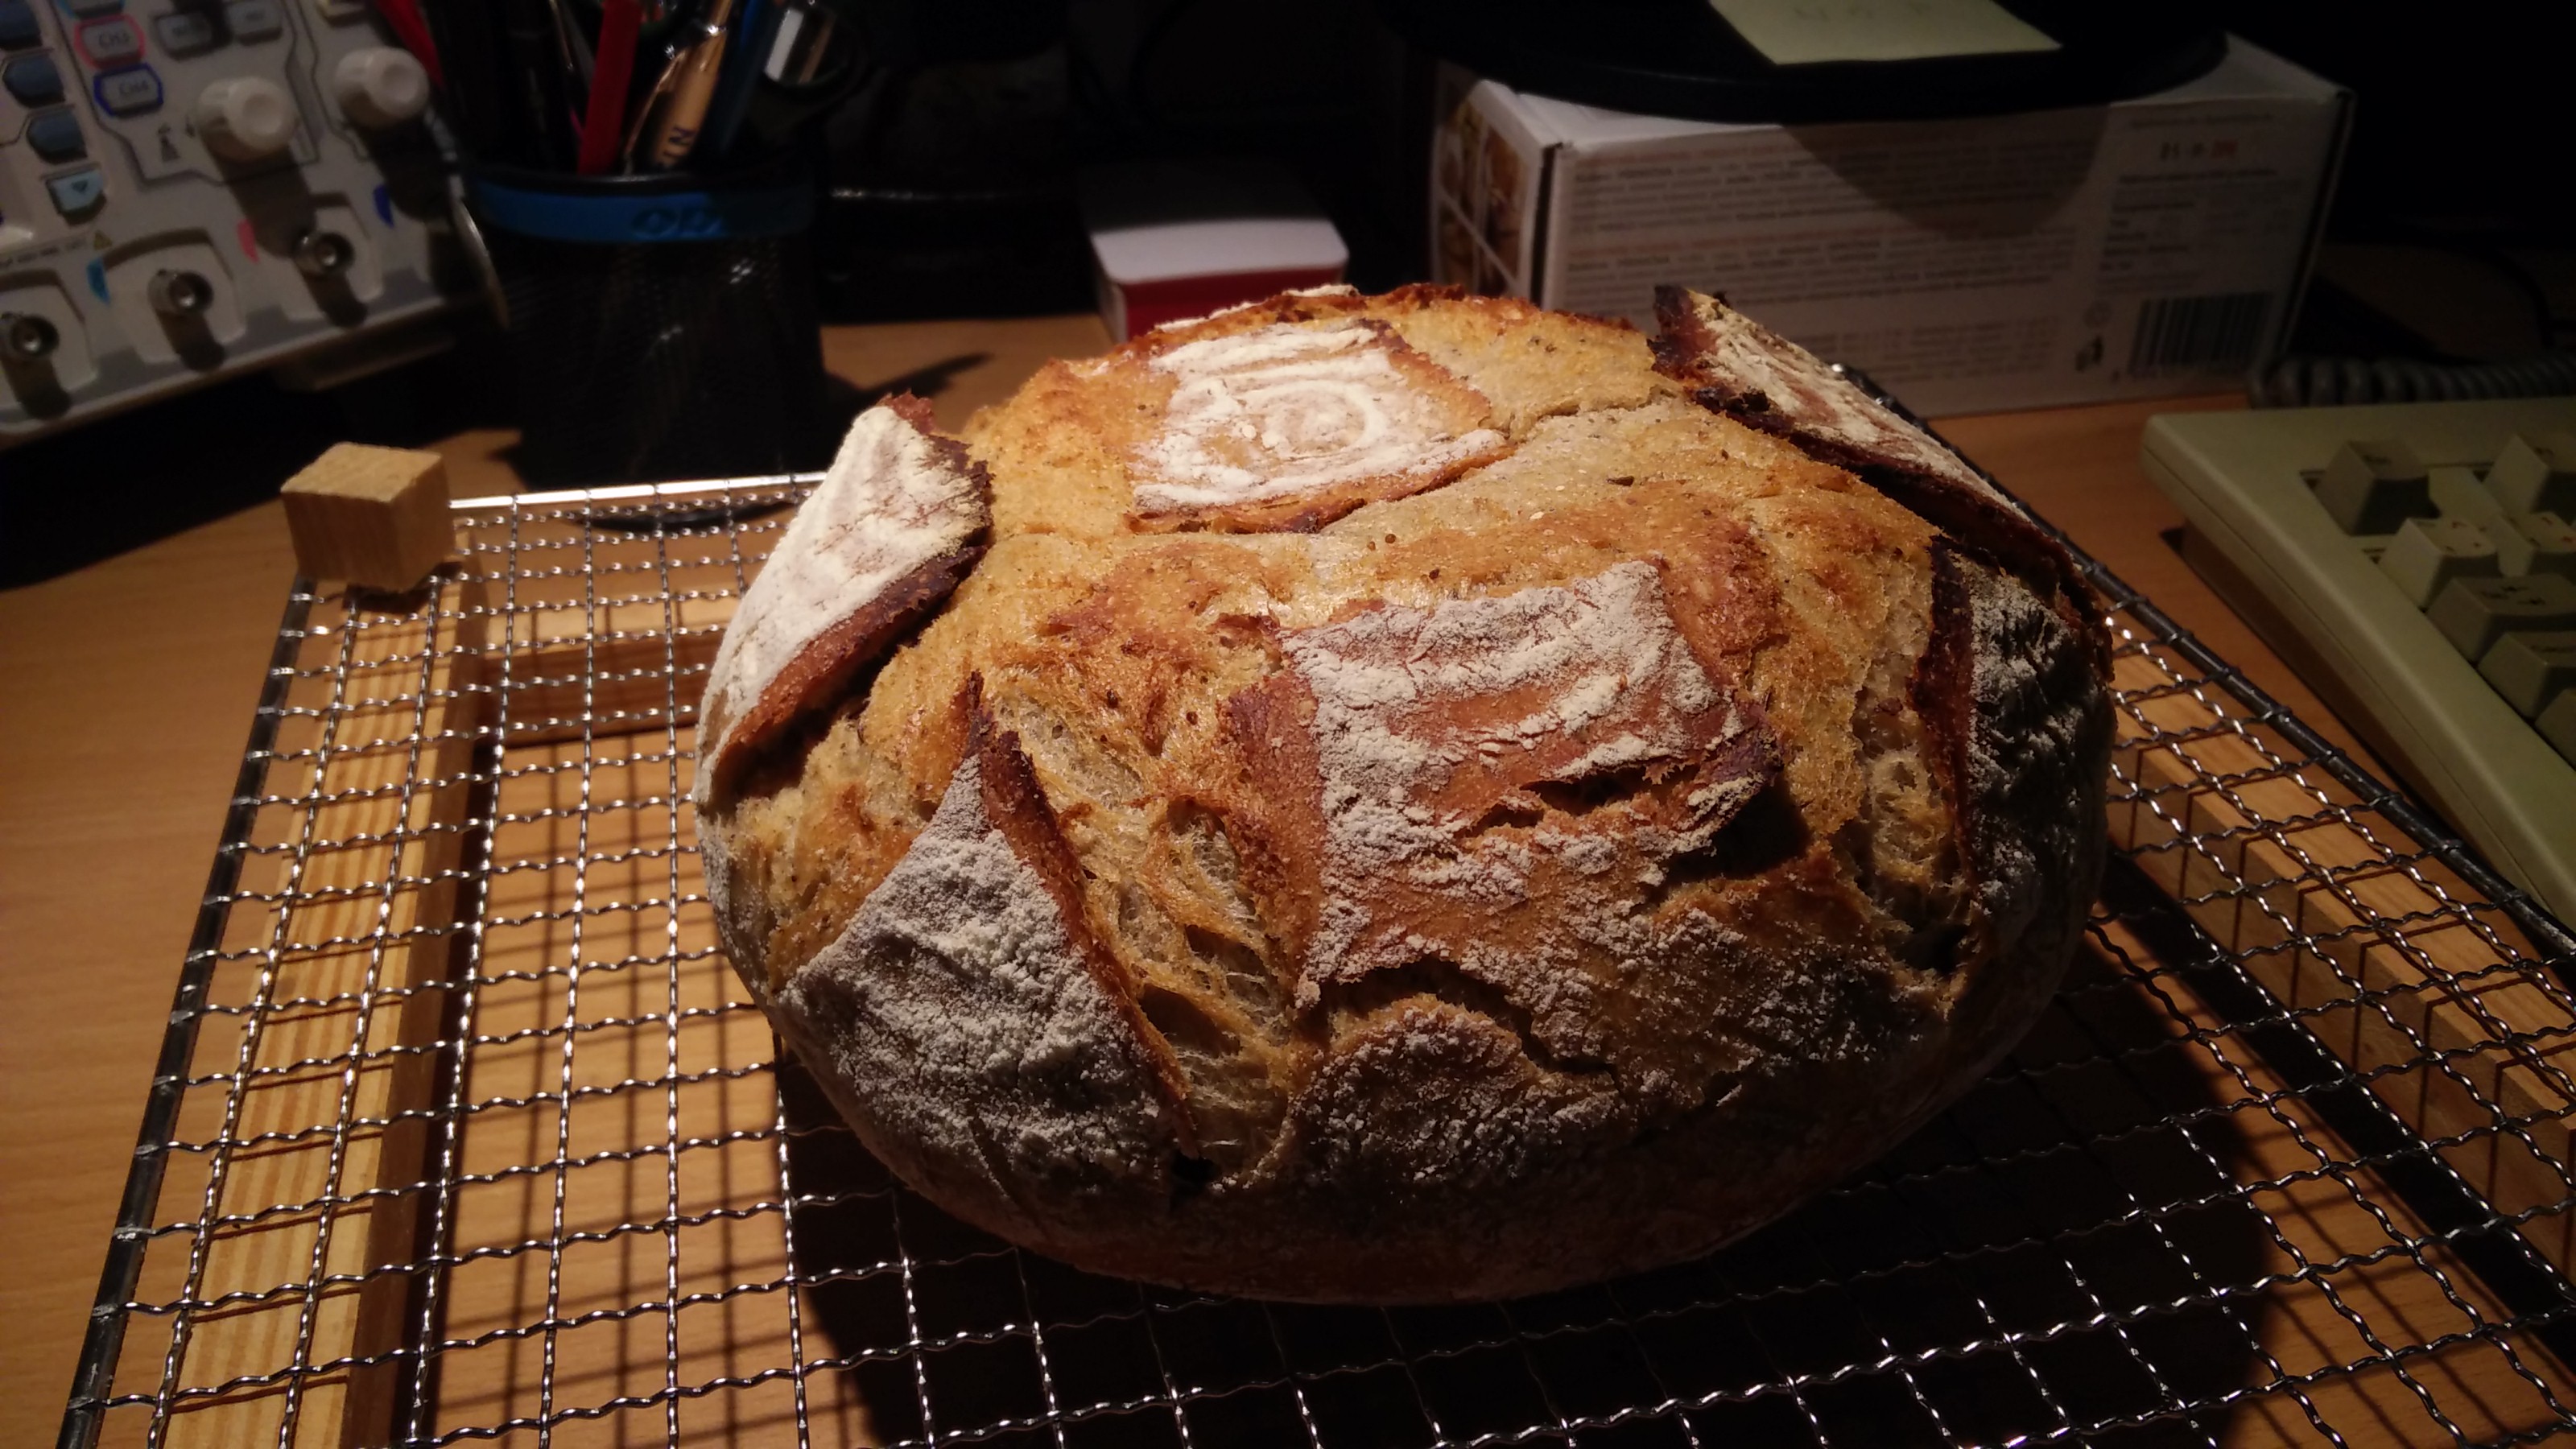 Bread photo data/2020-01-15/2020-01-15%2020.31.25.jpg